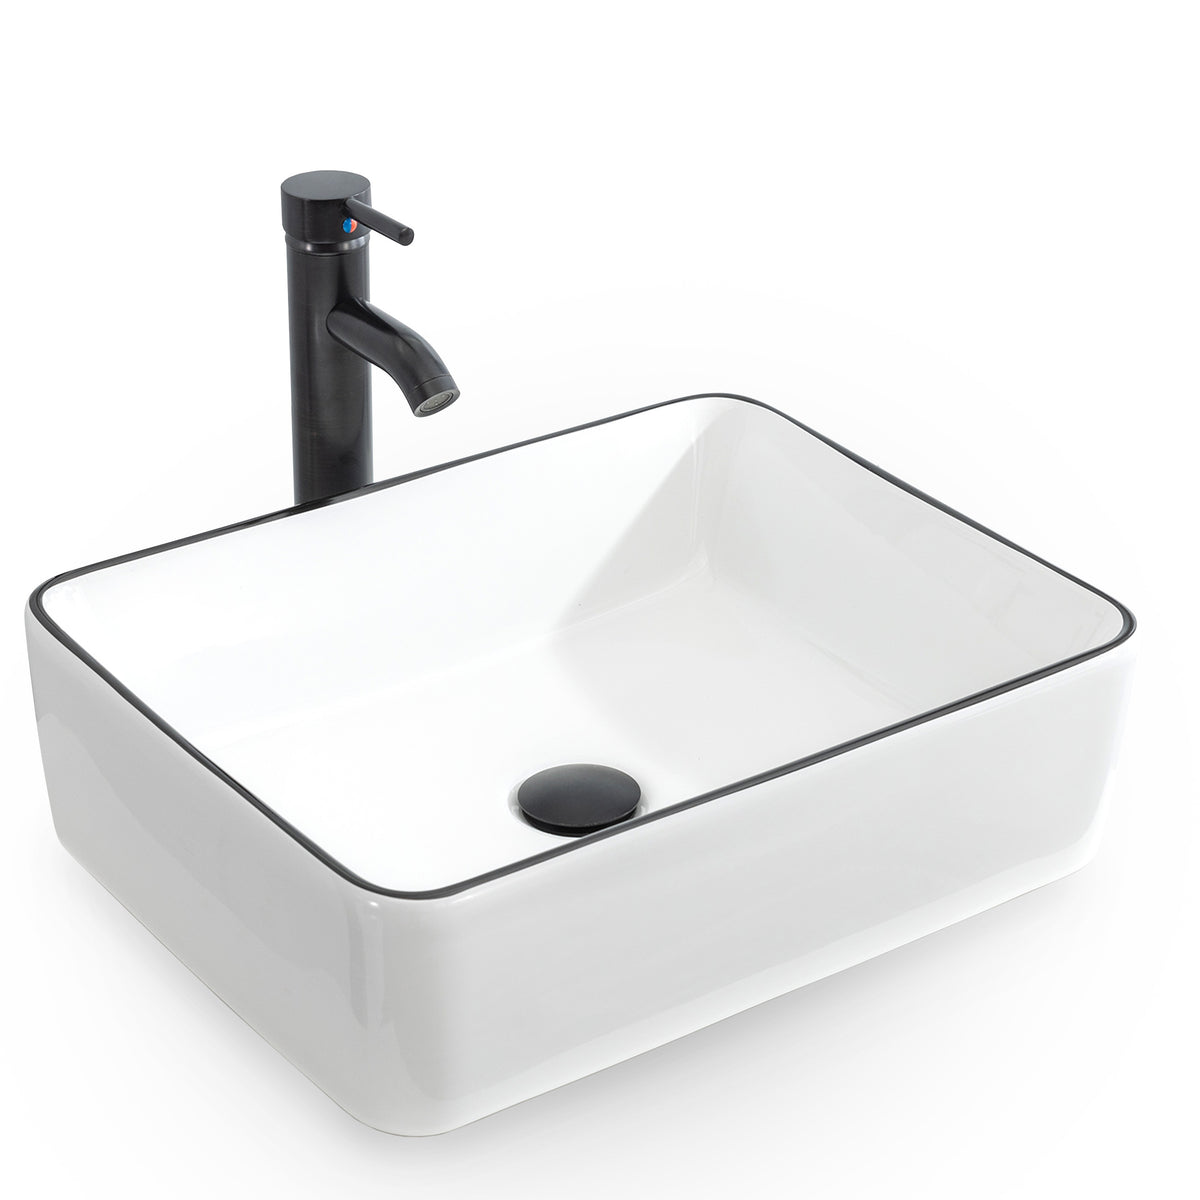 Eclife Bathroom Ceramic Sink Bowl Classic White with Black Decor Line Porcelain Vessel Sink